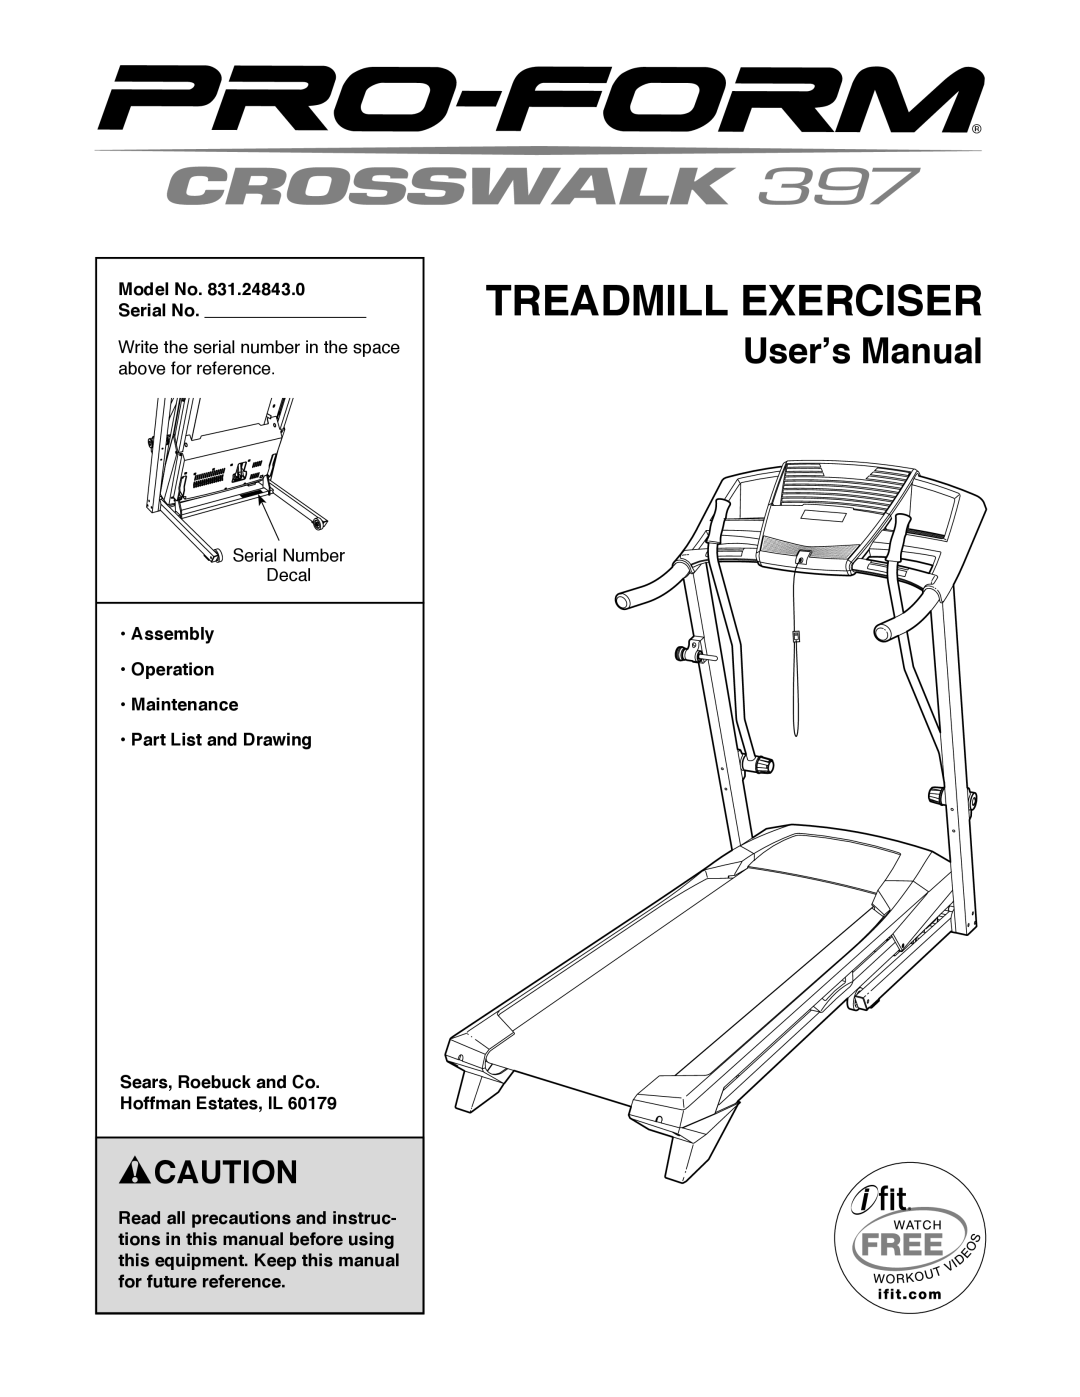 ProForm 397 user manual Treadmill Exerciser, User’s Manual, Model No Serial No, Sears, Roebuck and Co Hoffman Estates, IL 